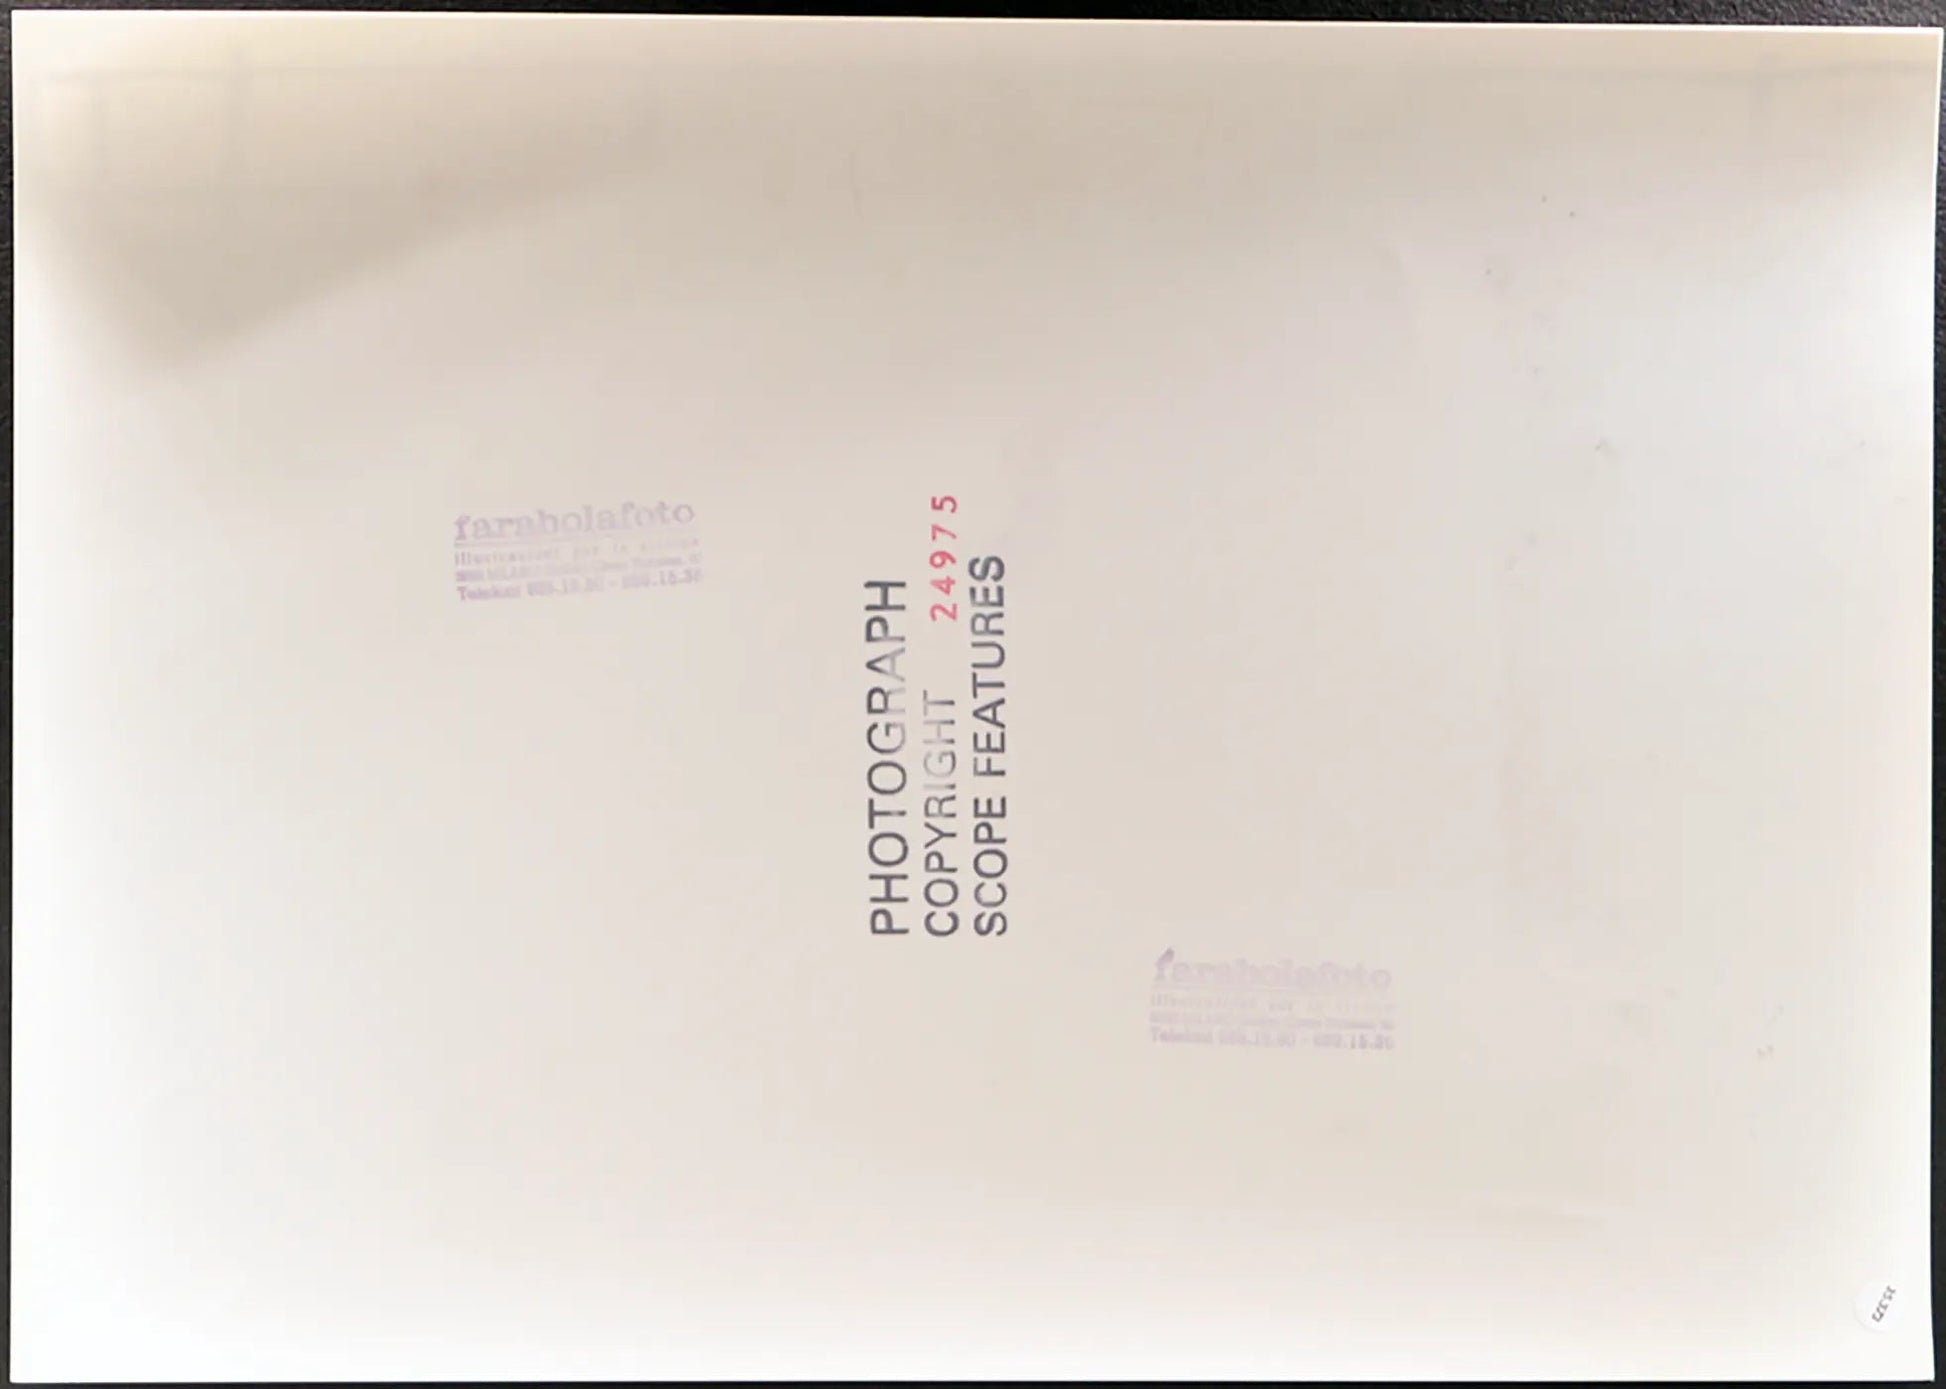 Puledri di razza Caspian Ft 35373 - Stampa 27x37 cm - Farabola Stampa ai sali d'argento